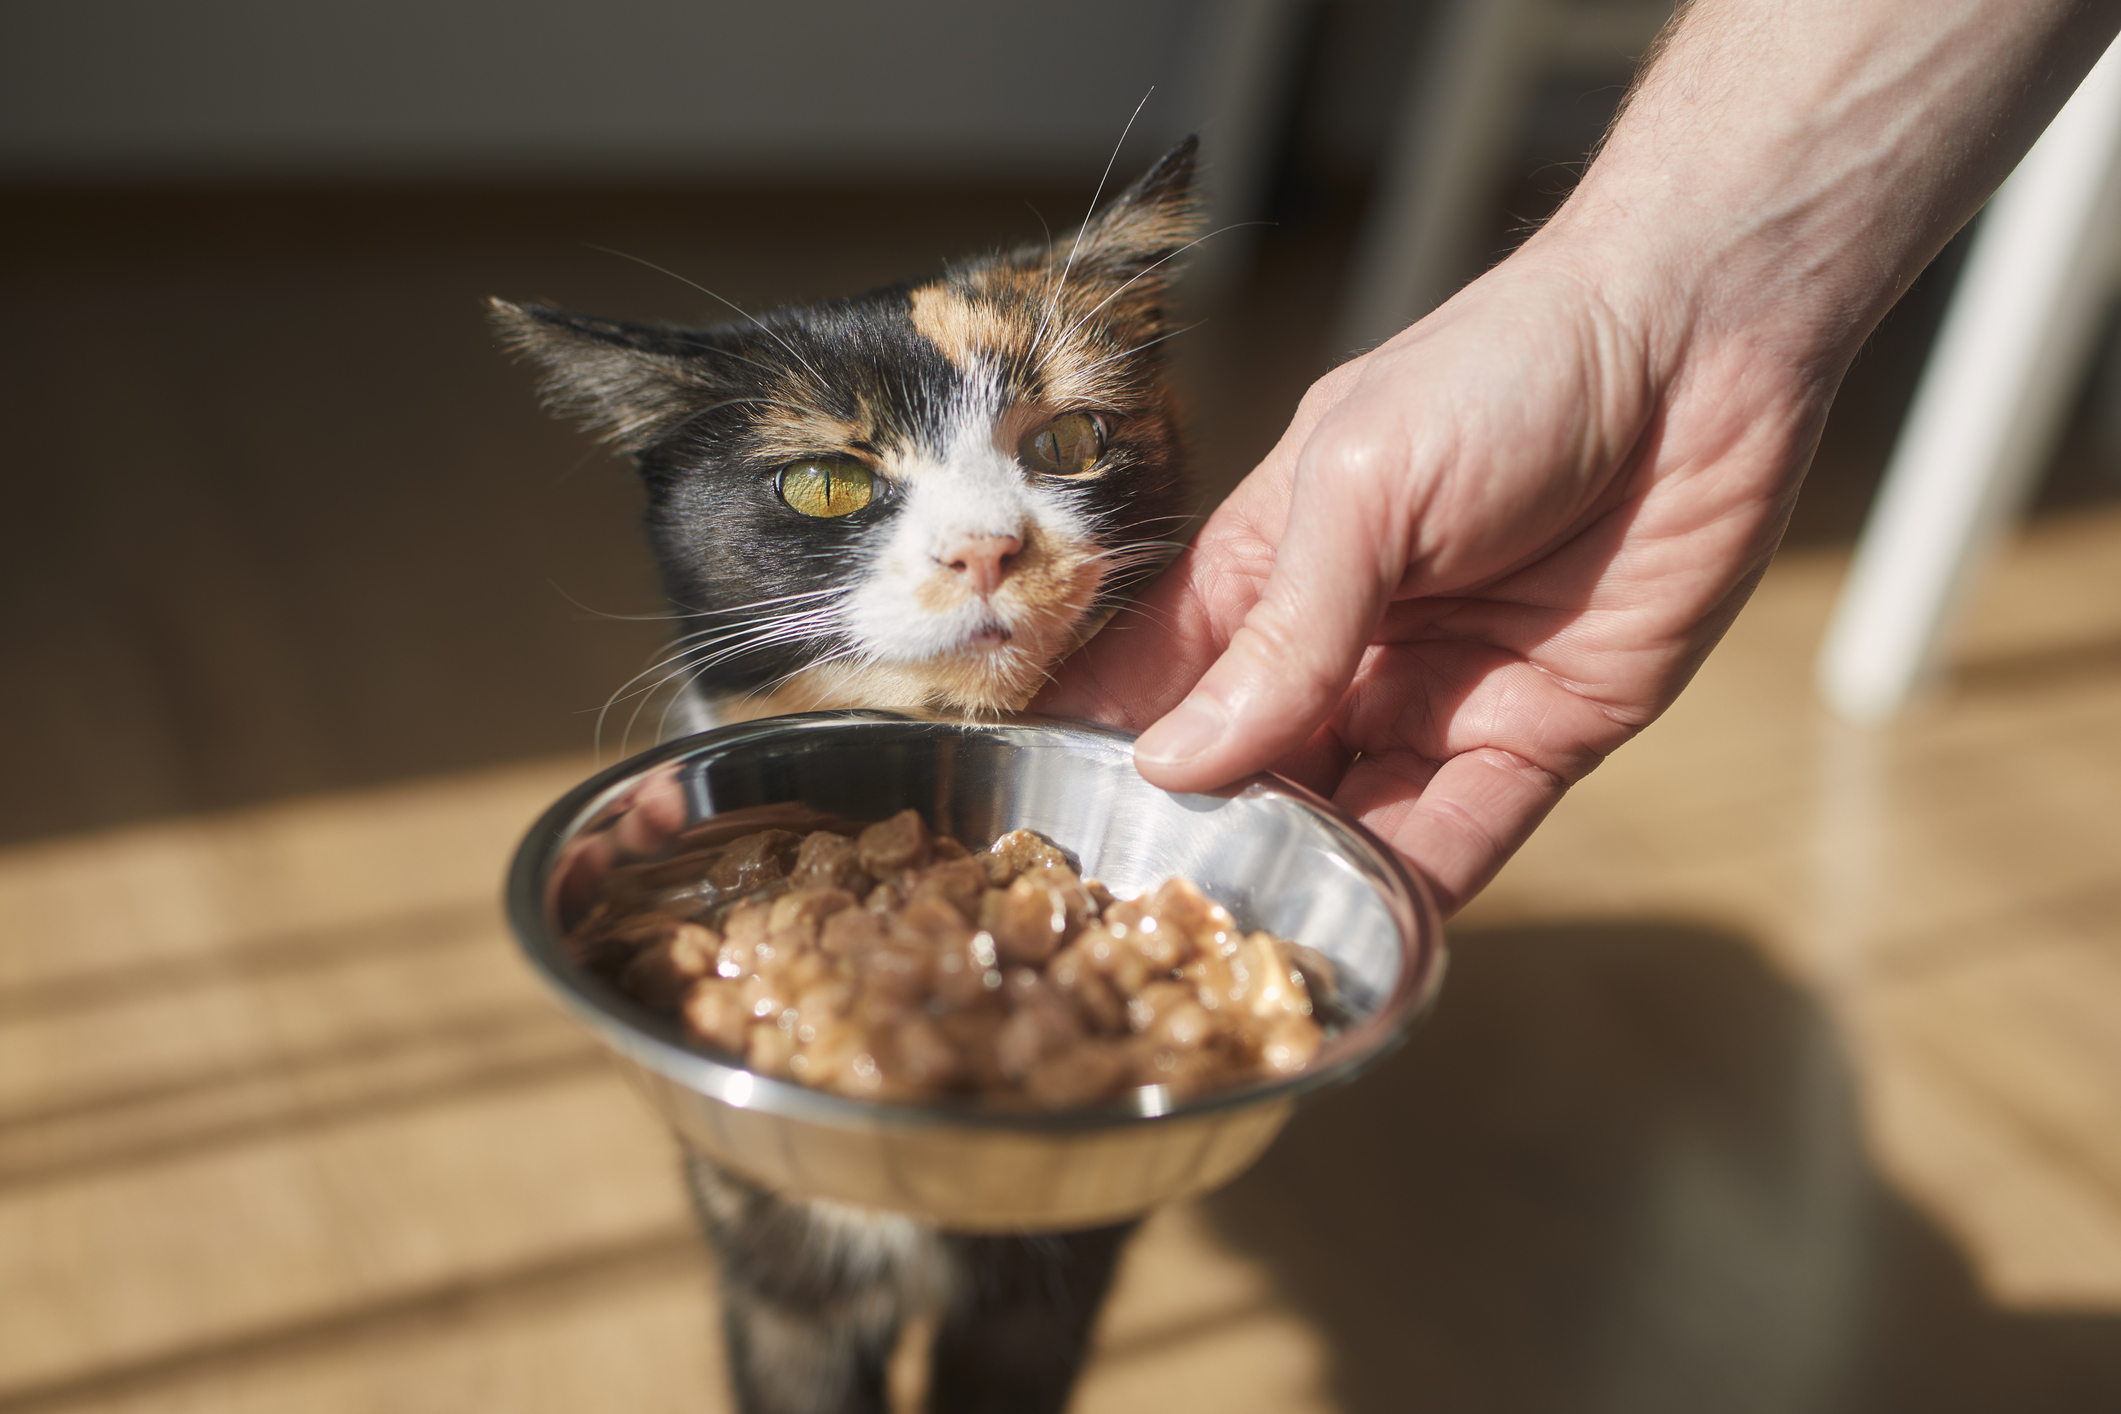 https://d.newsweek.com/en/full/2249407/cat-getting-food-bowl.jpg